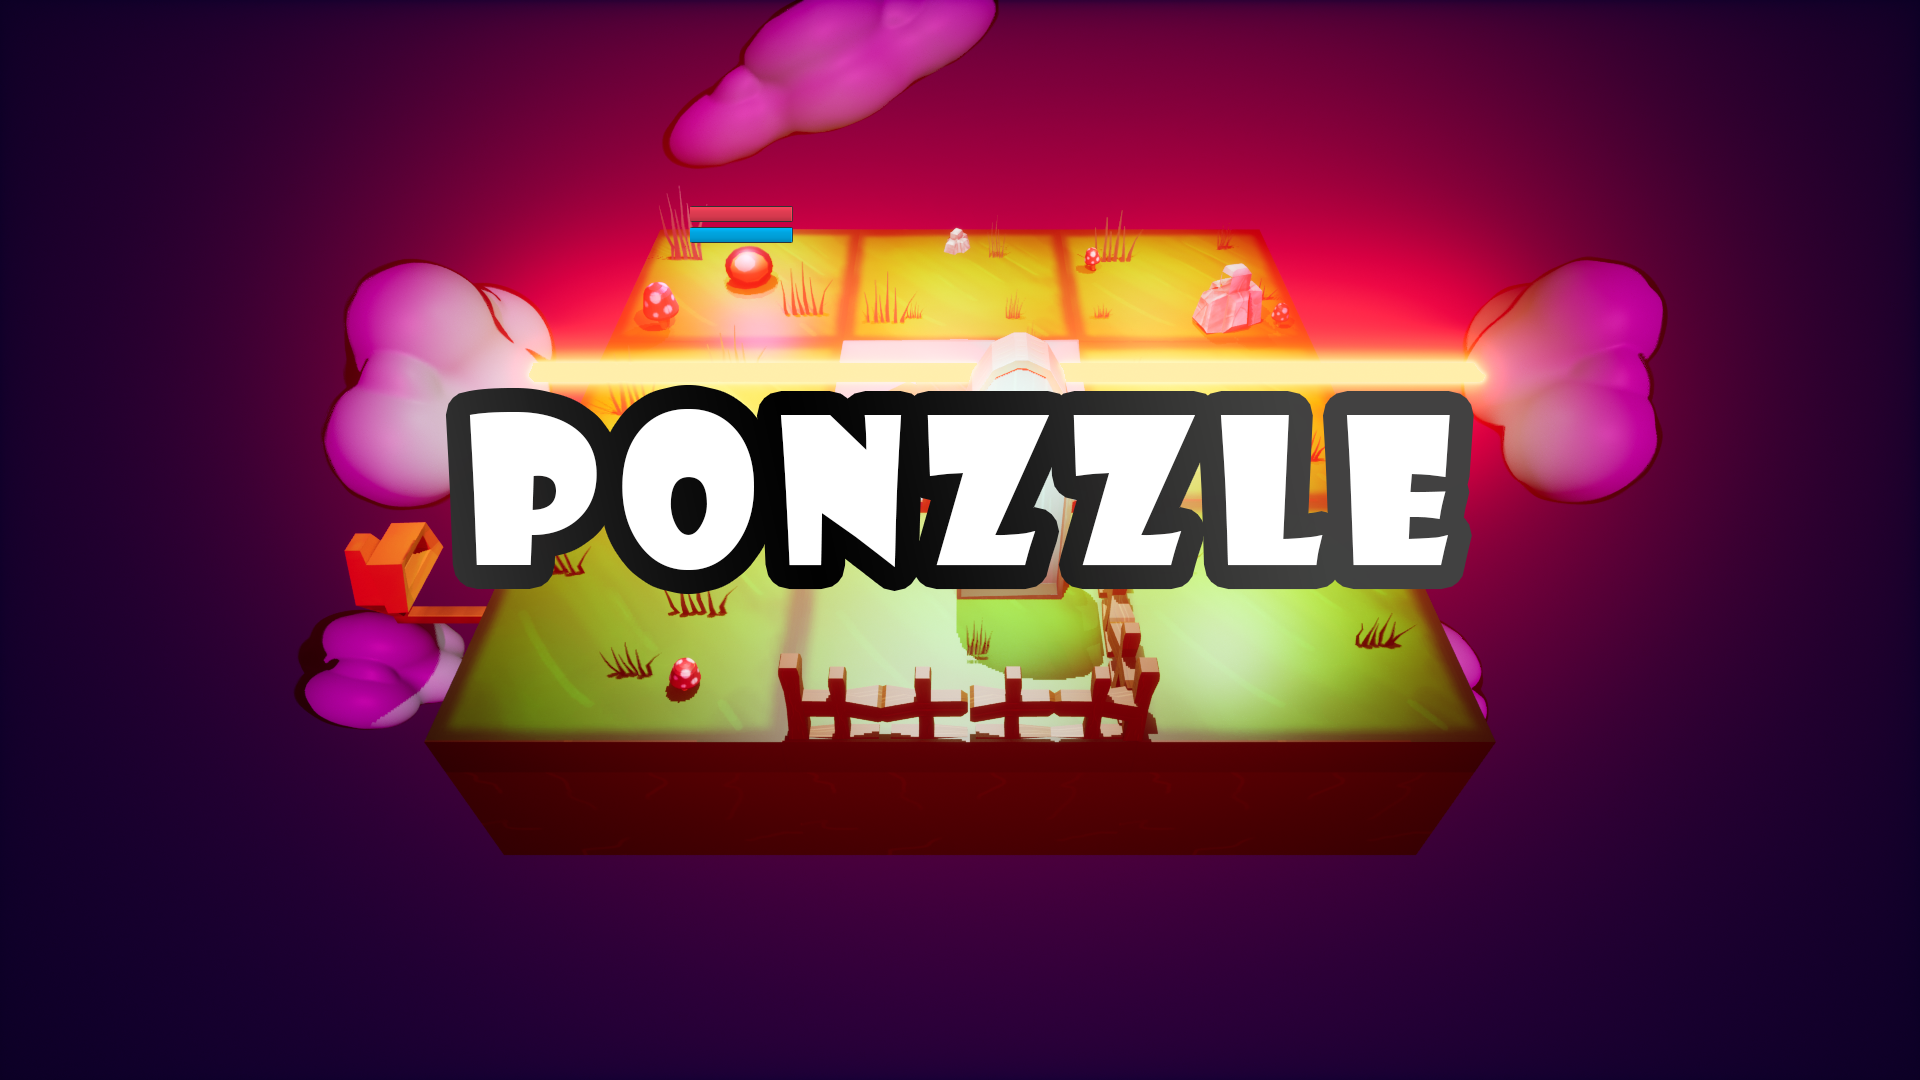 Ponnzle